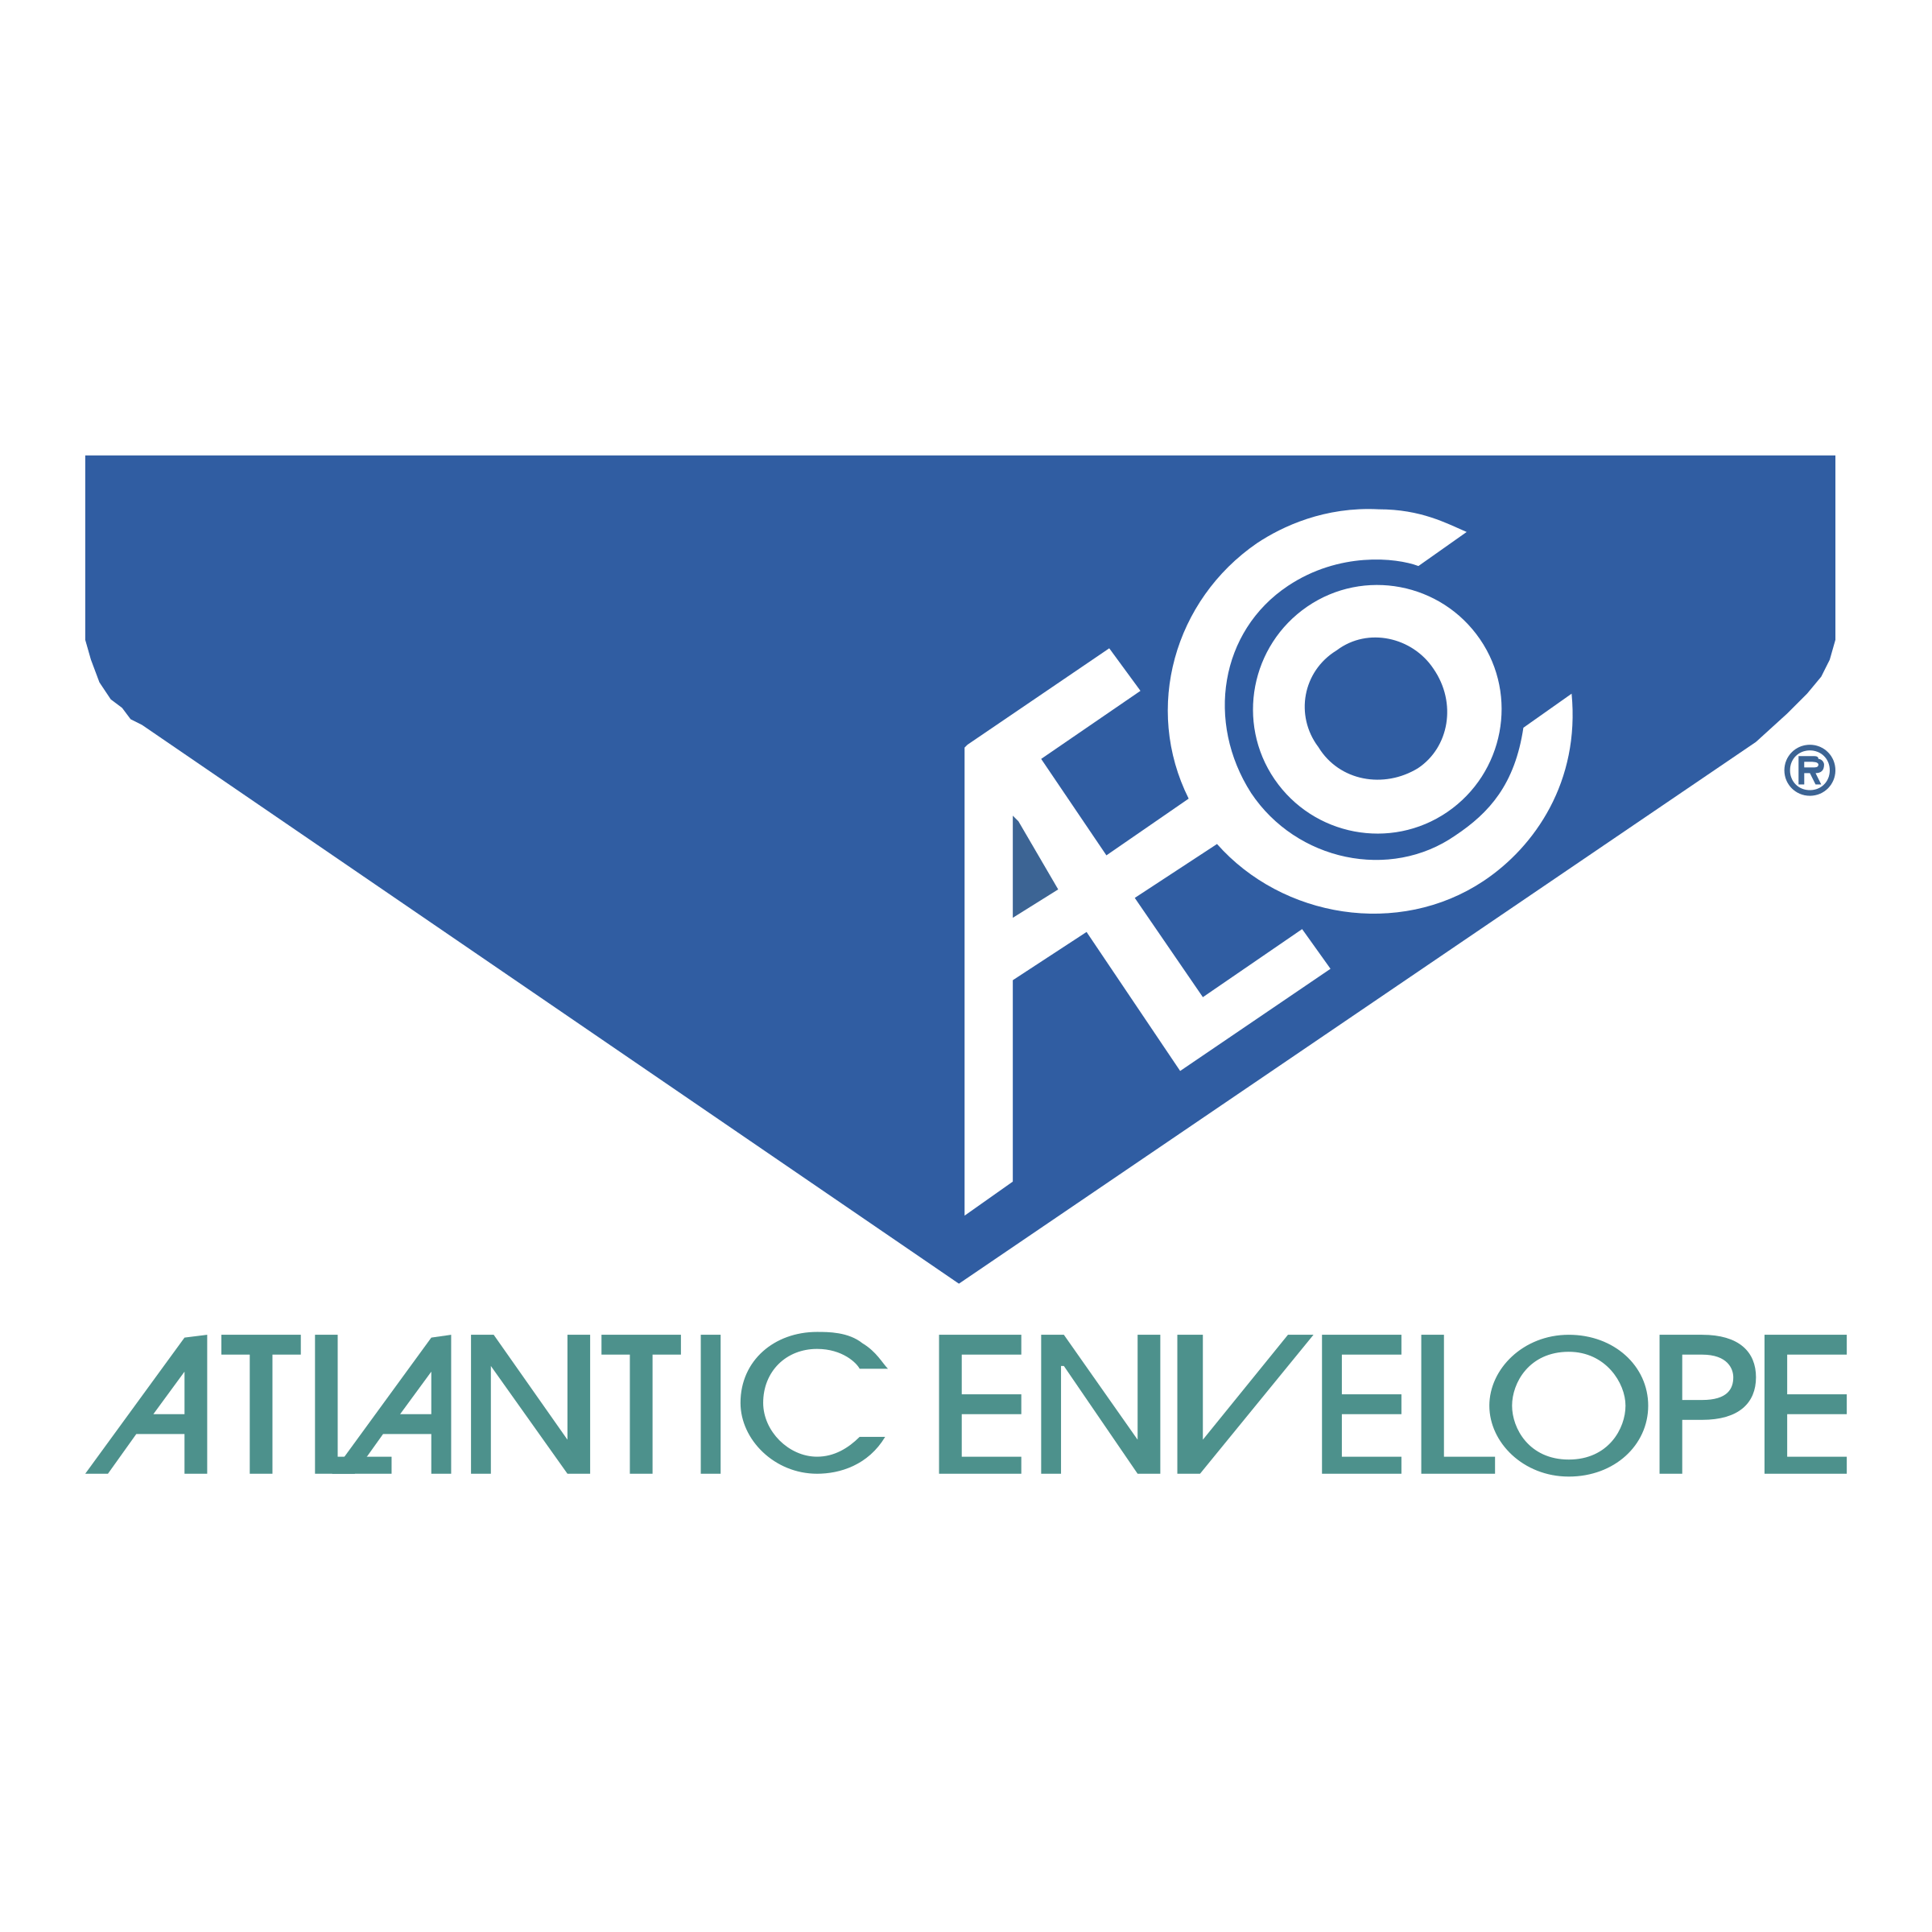 And White Black Envelopelogo Logo - Atlantic Envelope Logo PNG Transparent & SVG Vector - Freebie Supply